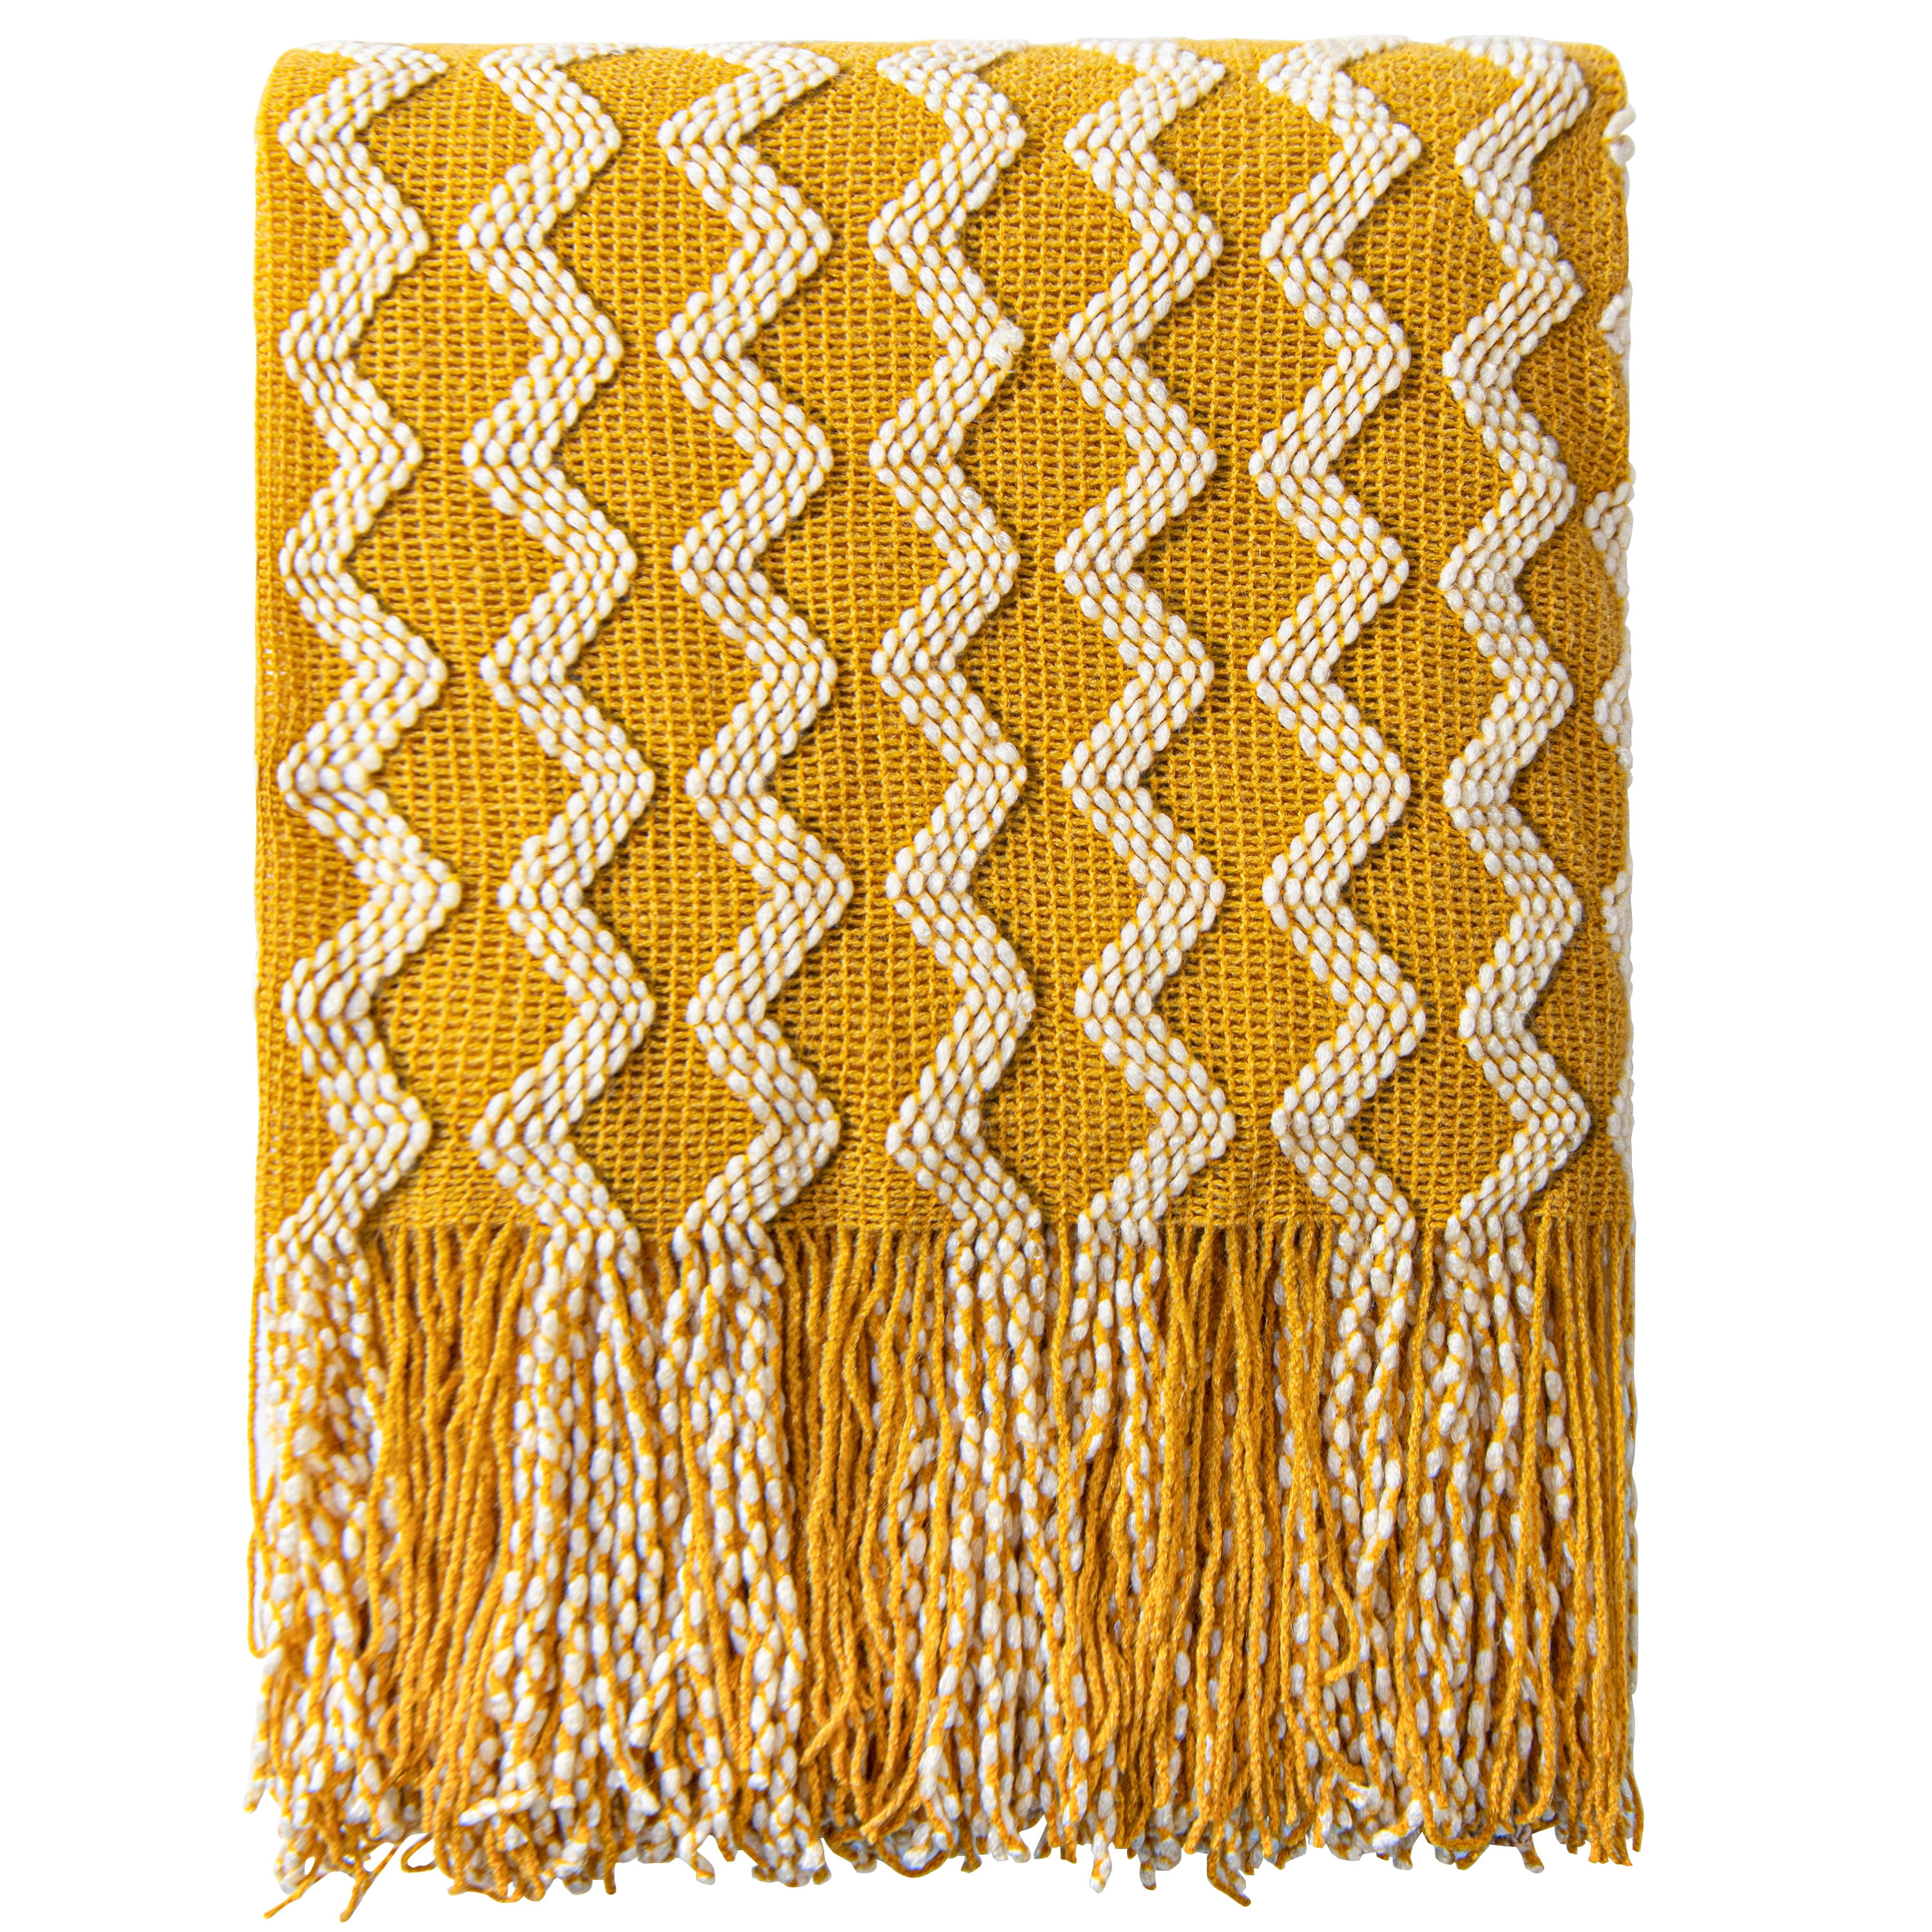 Battilo Mixed Colors Soft Knit Throw Woven Acrylic Sofa Bed Blanket 63" 